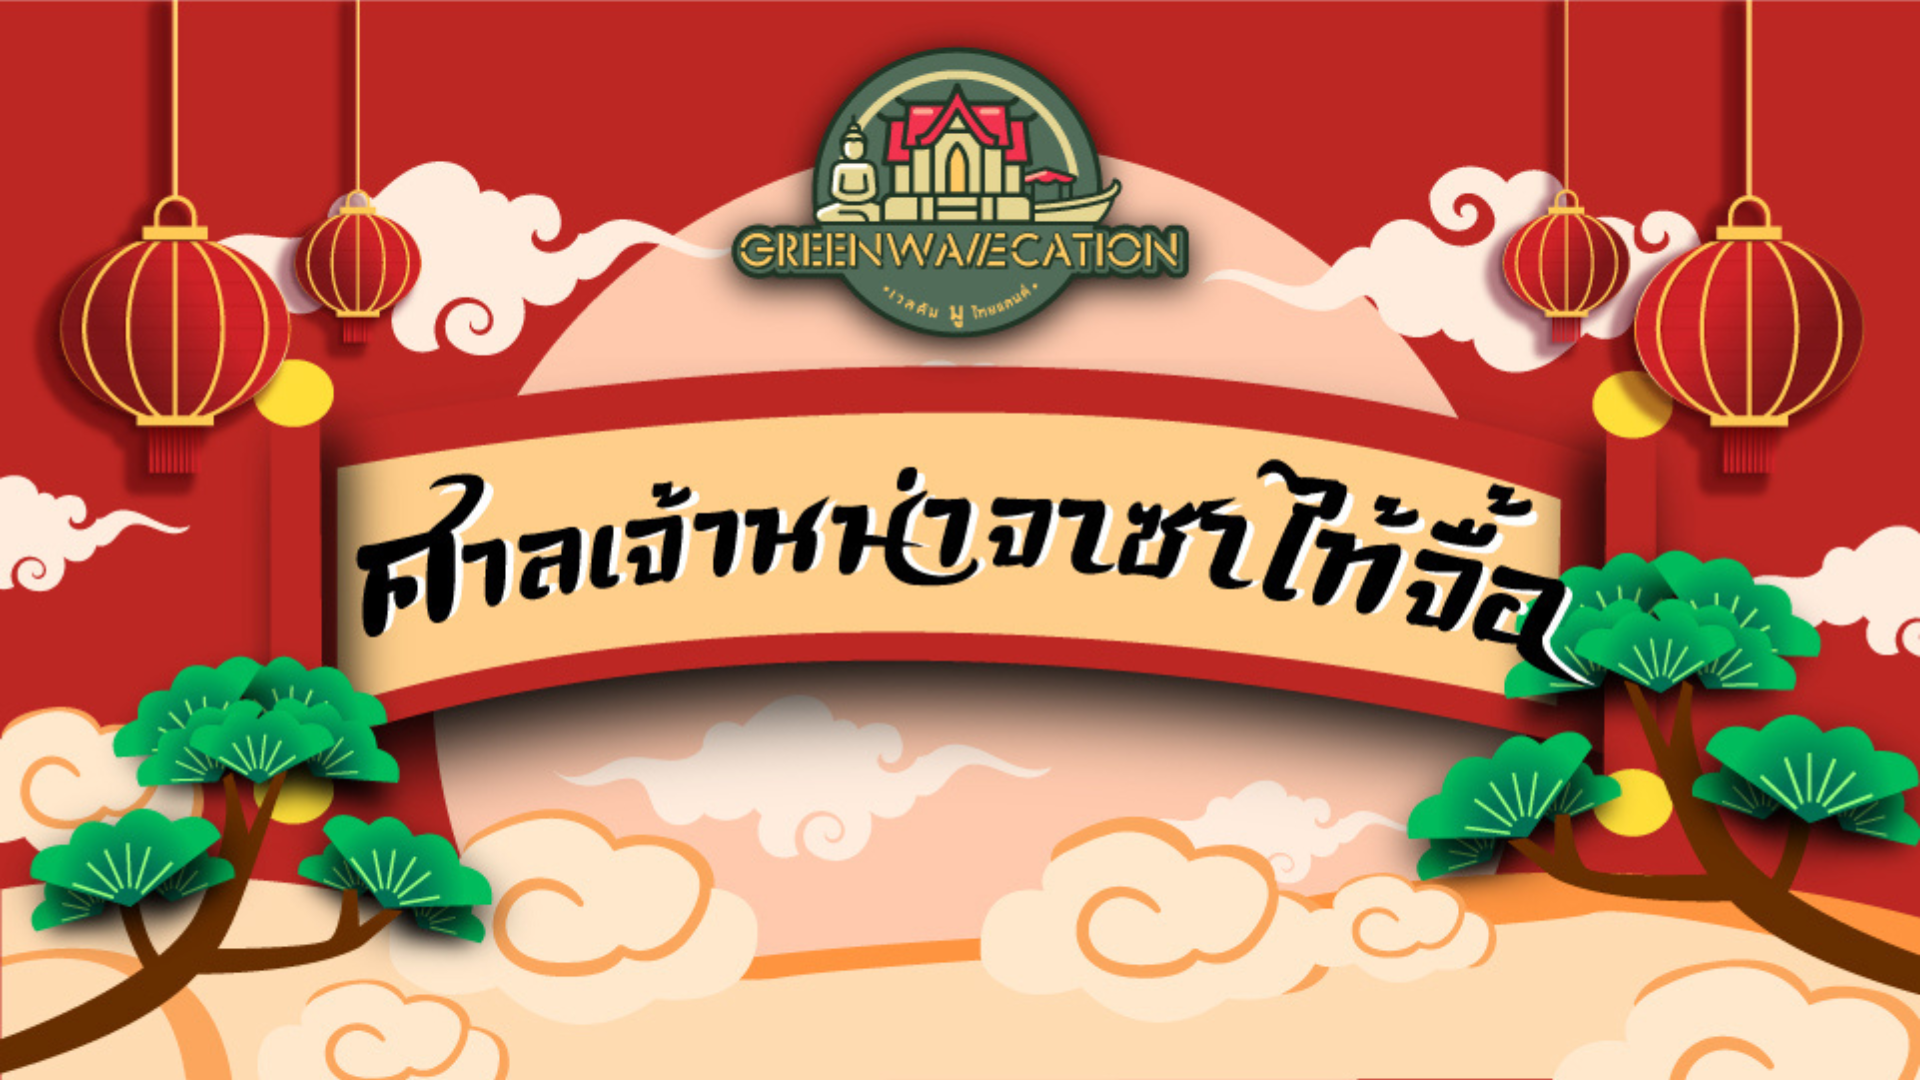 GreenWavecation เวลคัมมูไทยแลนด์ "ชลบุรี"